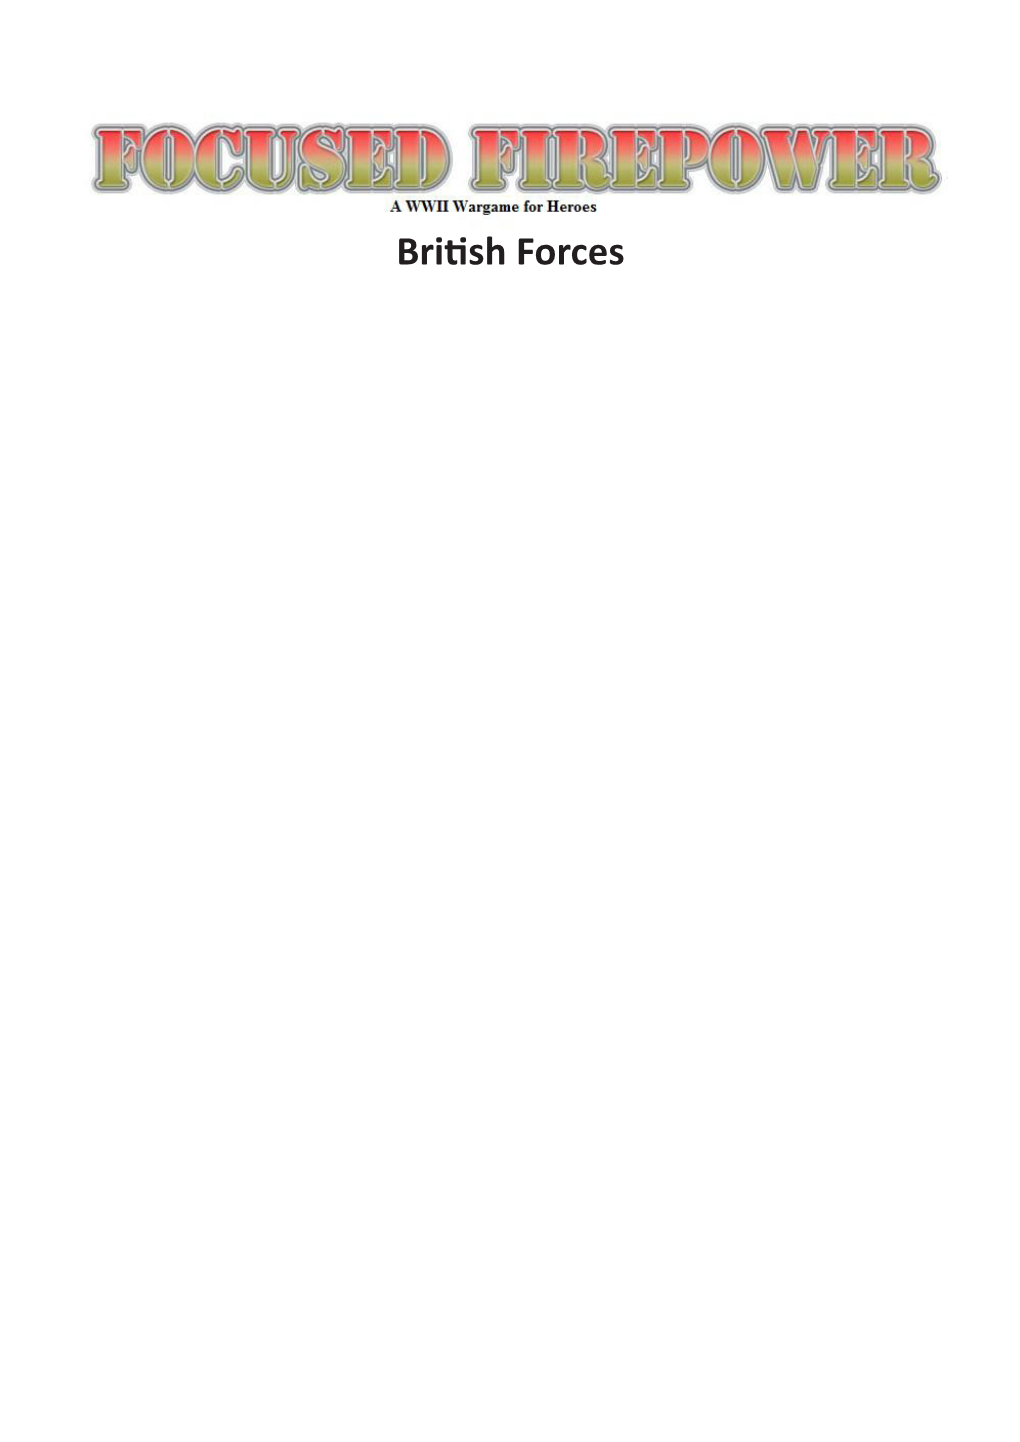 British Infantry Company